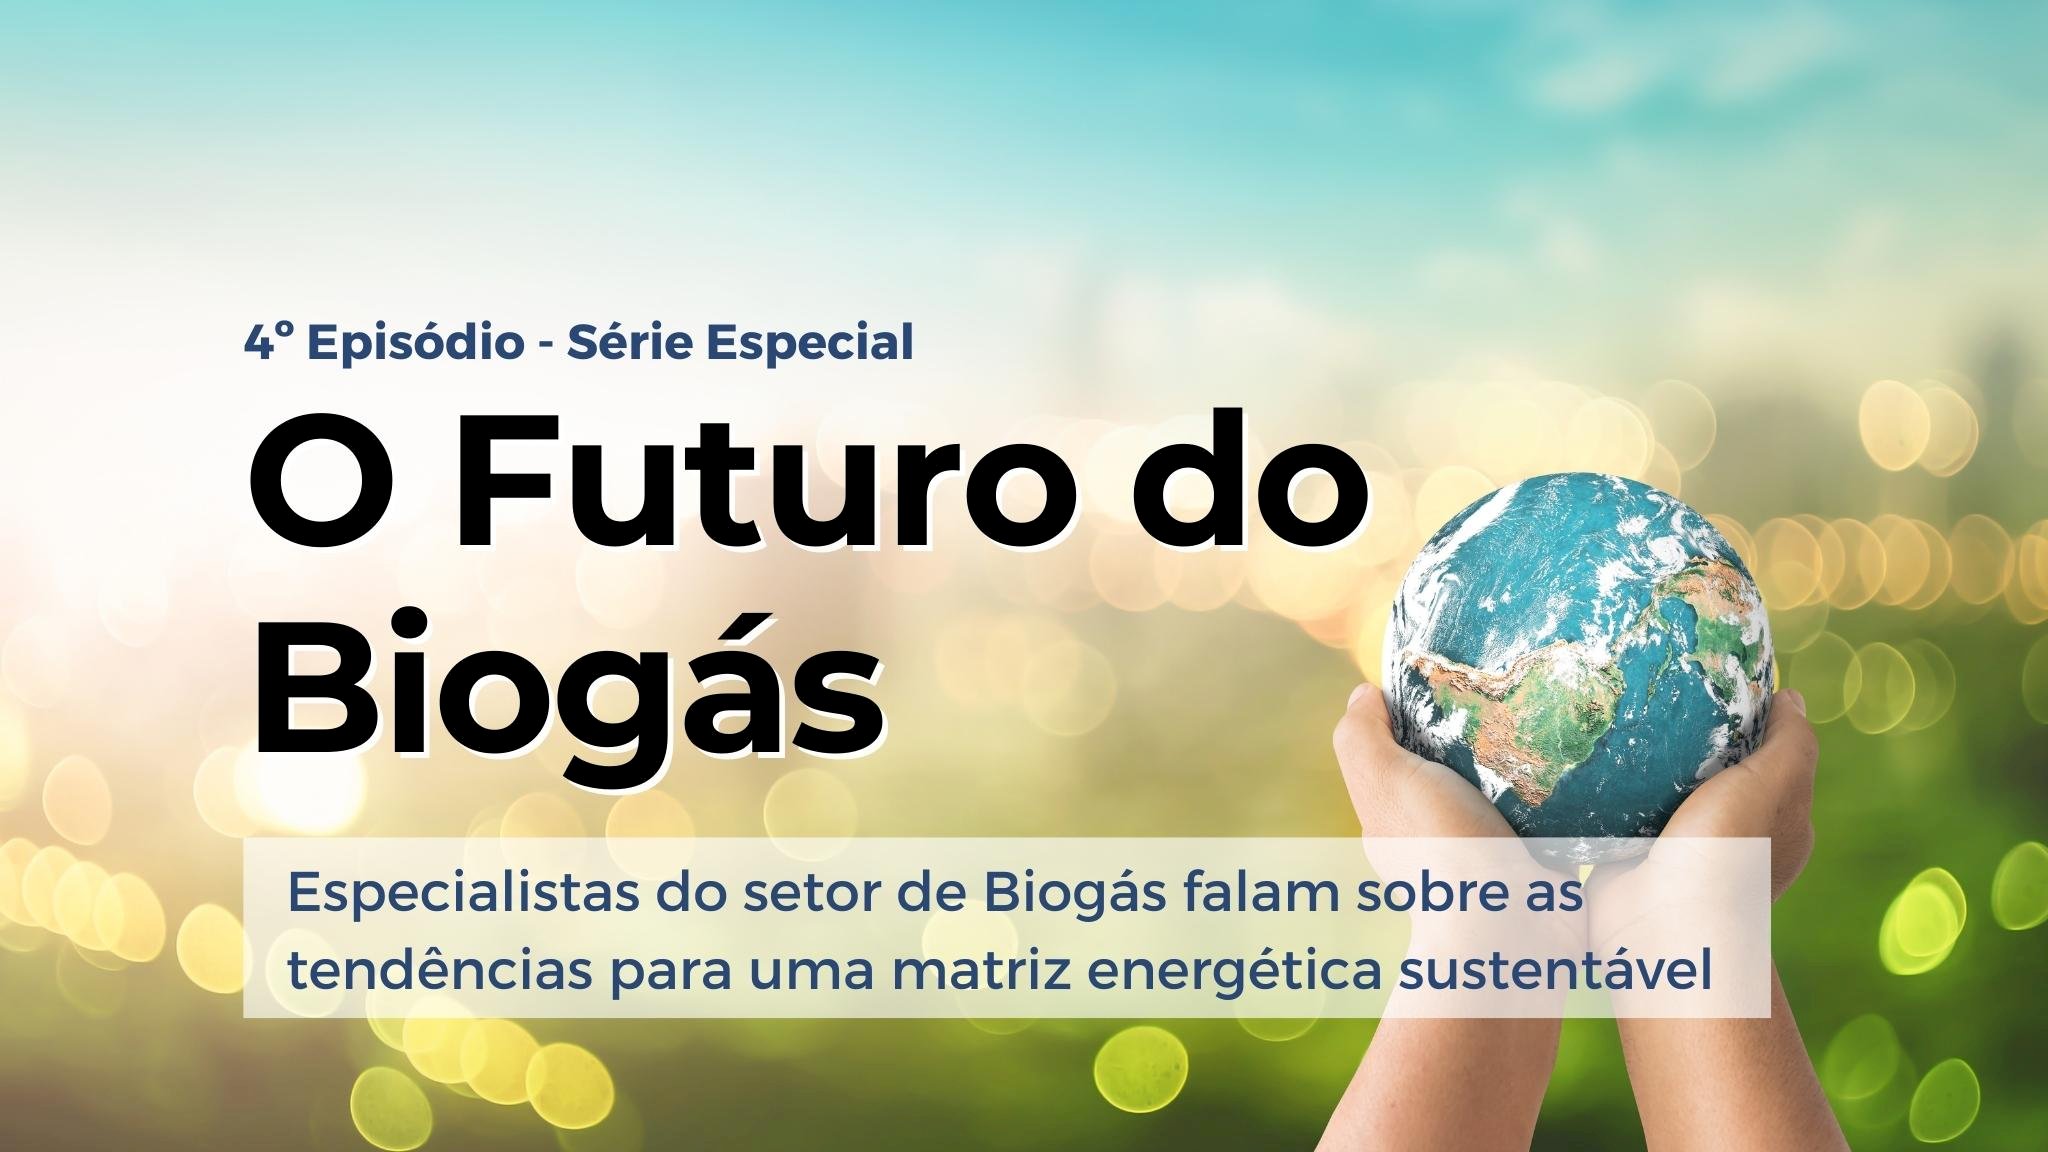 Qual será o futuro do biogás? Ep 4 - Cícero Bley Jr.